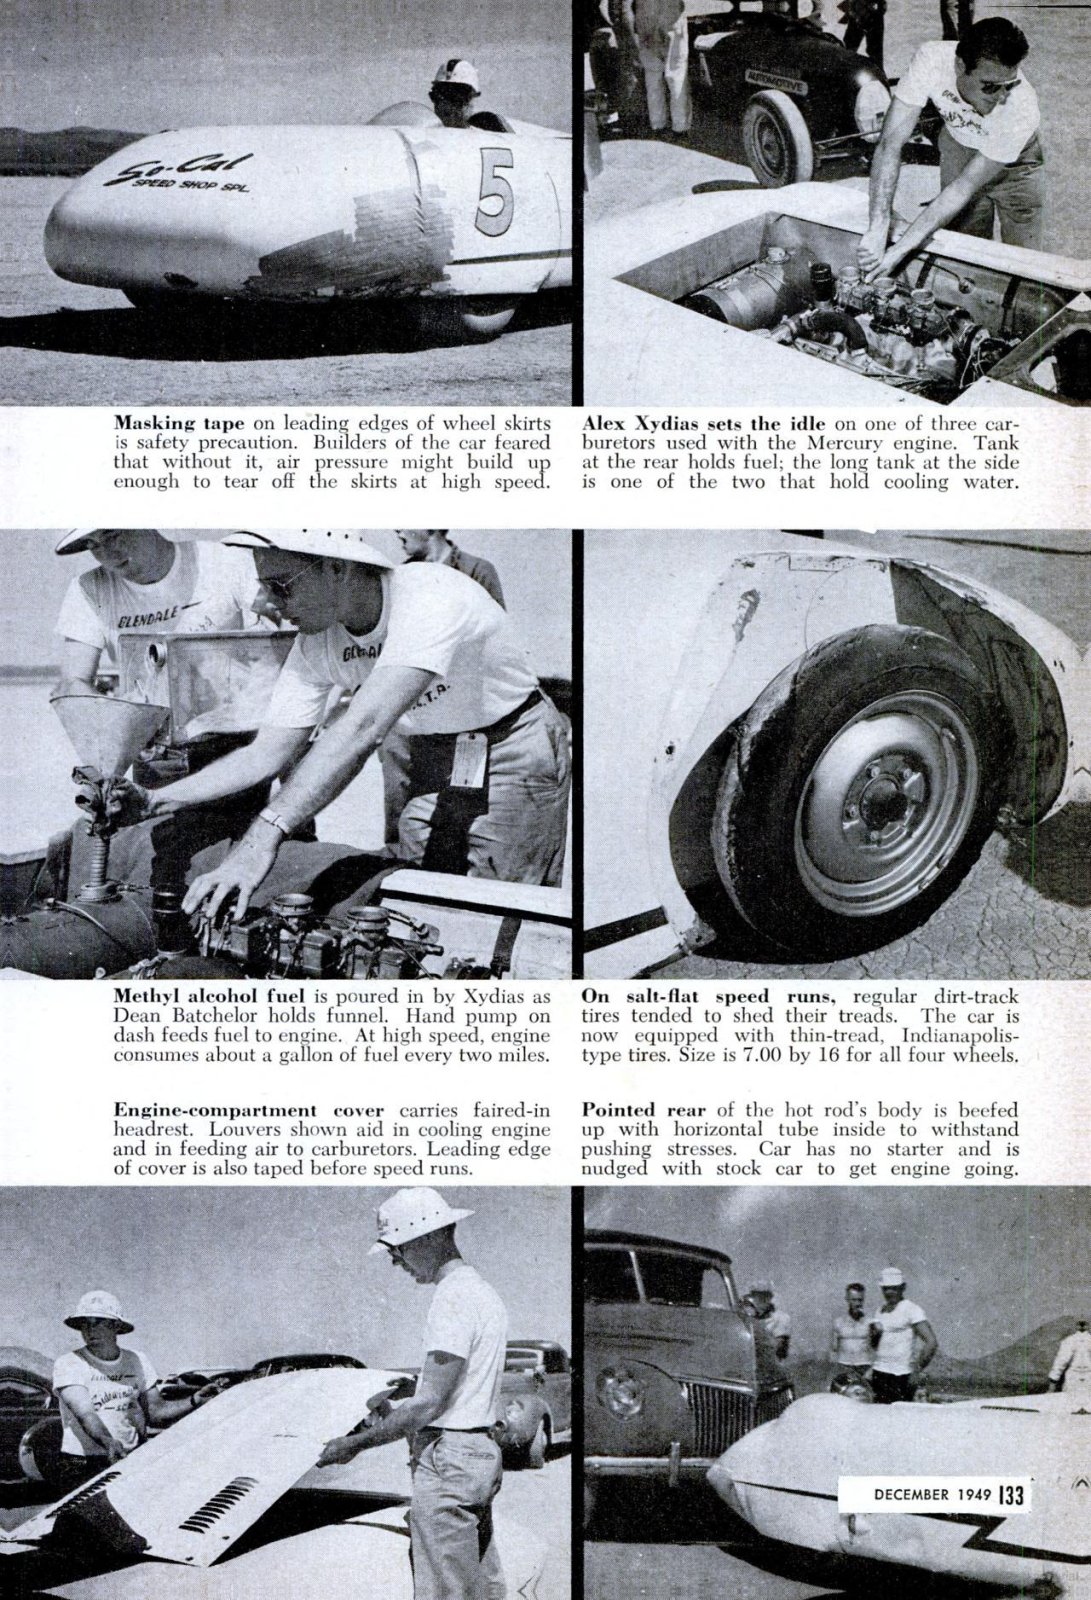 Popular Science - December 1949 - page 133.jpg